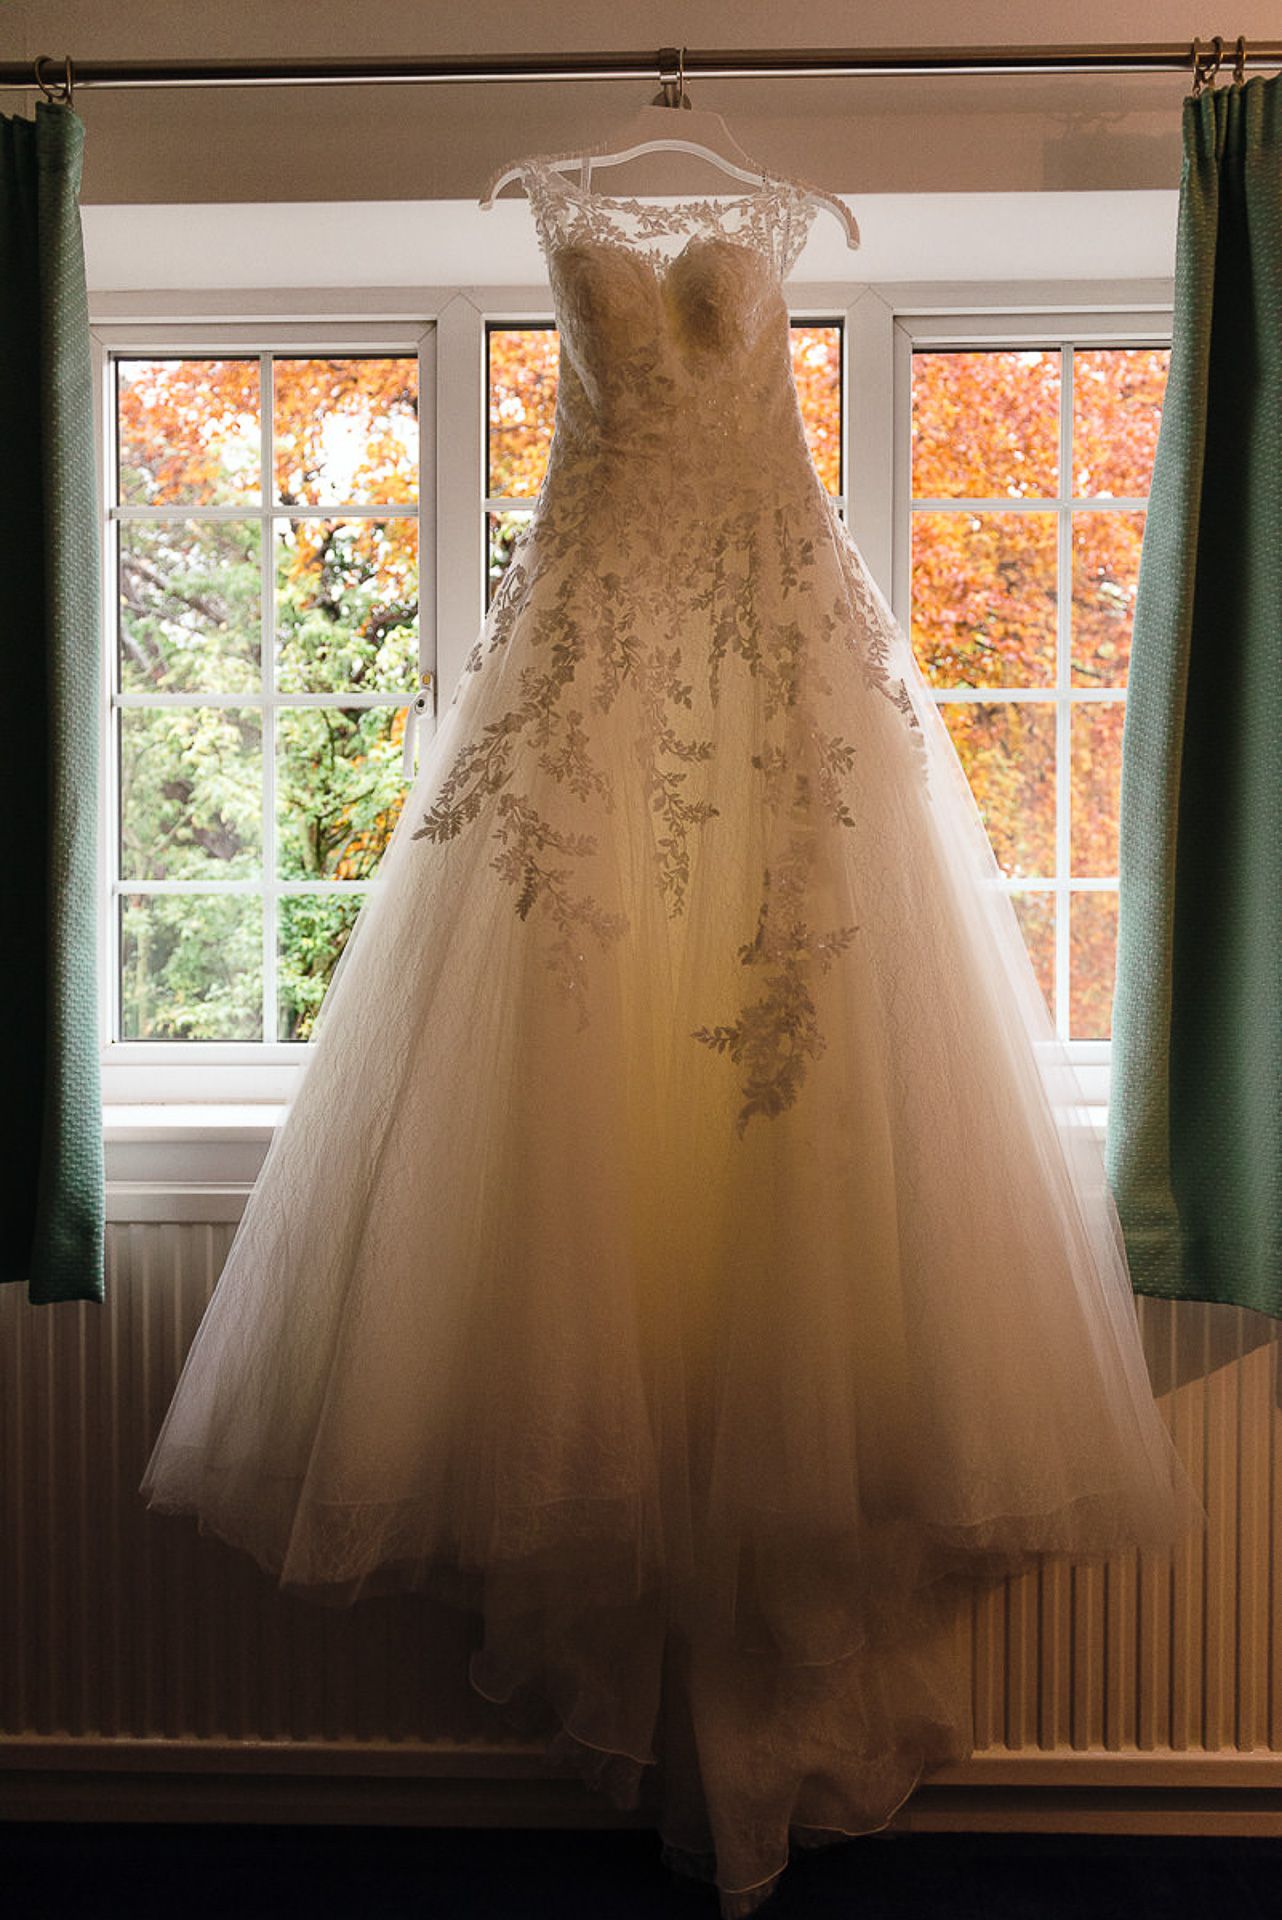 brides wedding dress hangs in the window